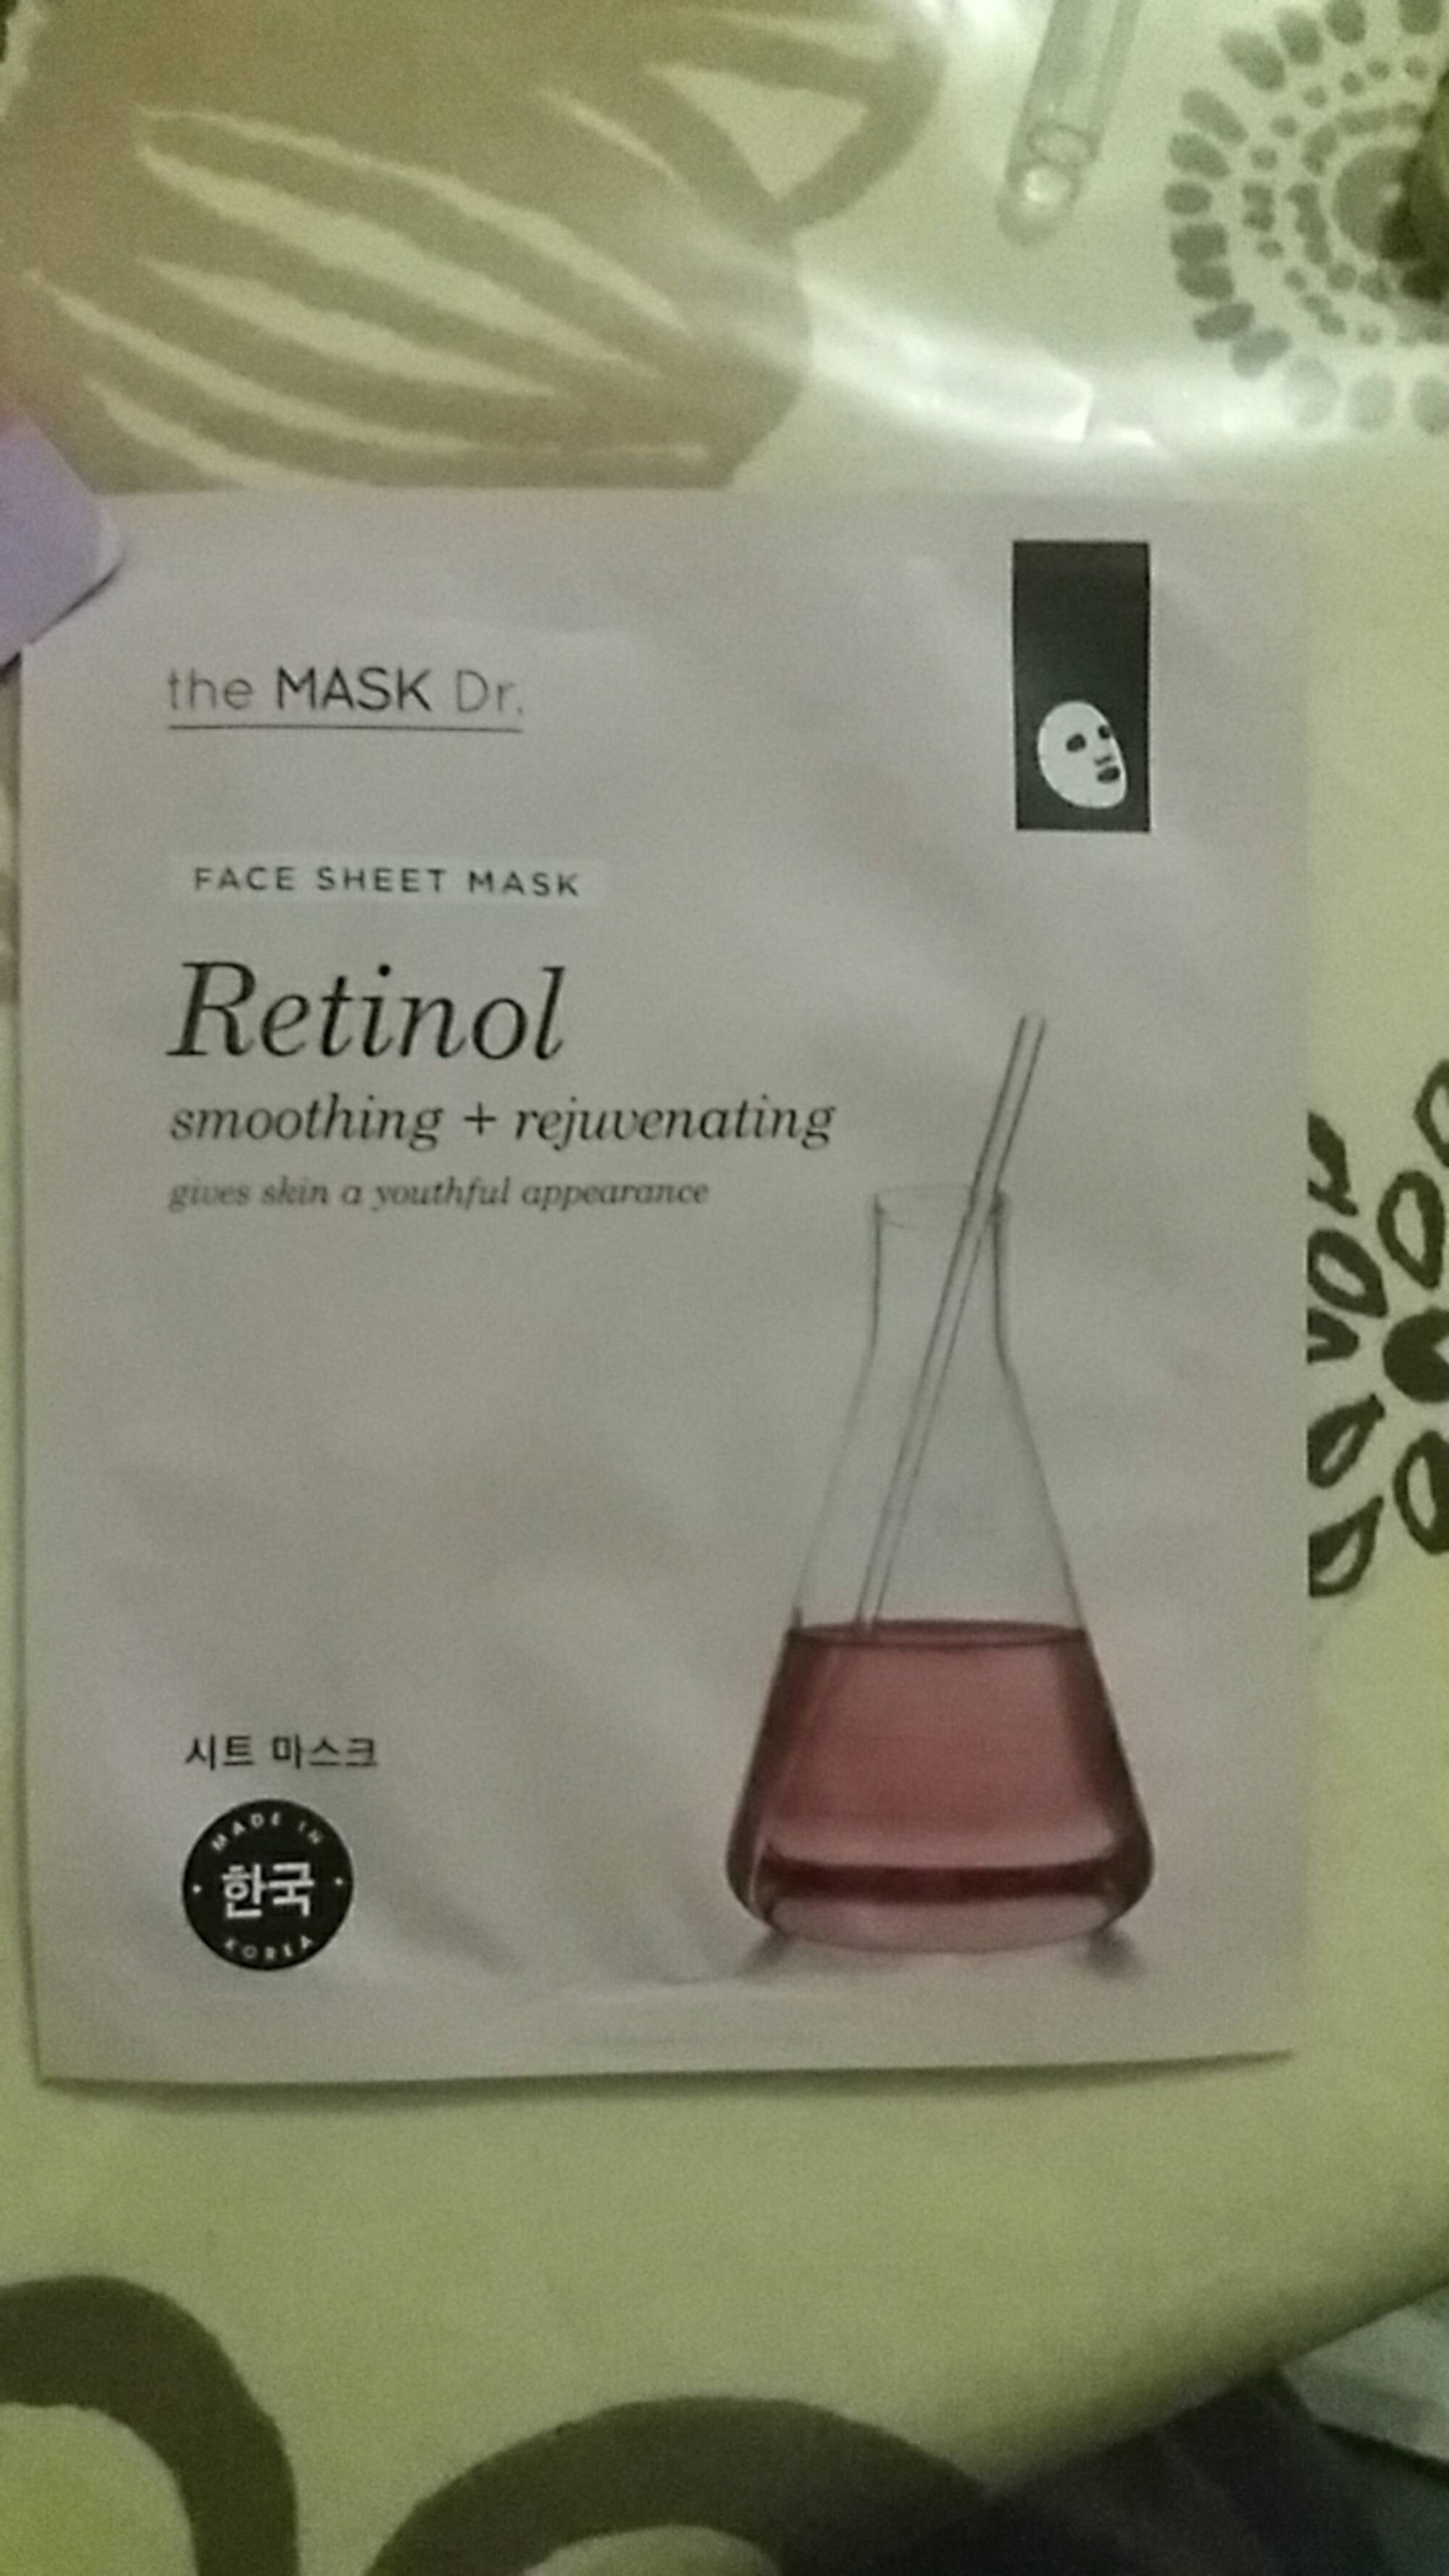 THE MASK DR. - Face sheet mask - Retinol